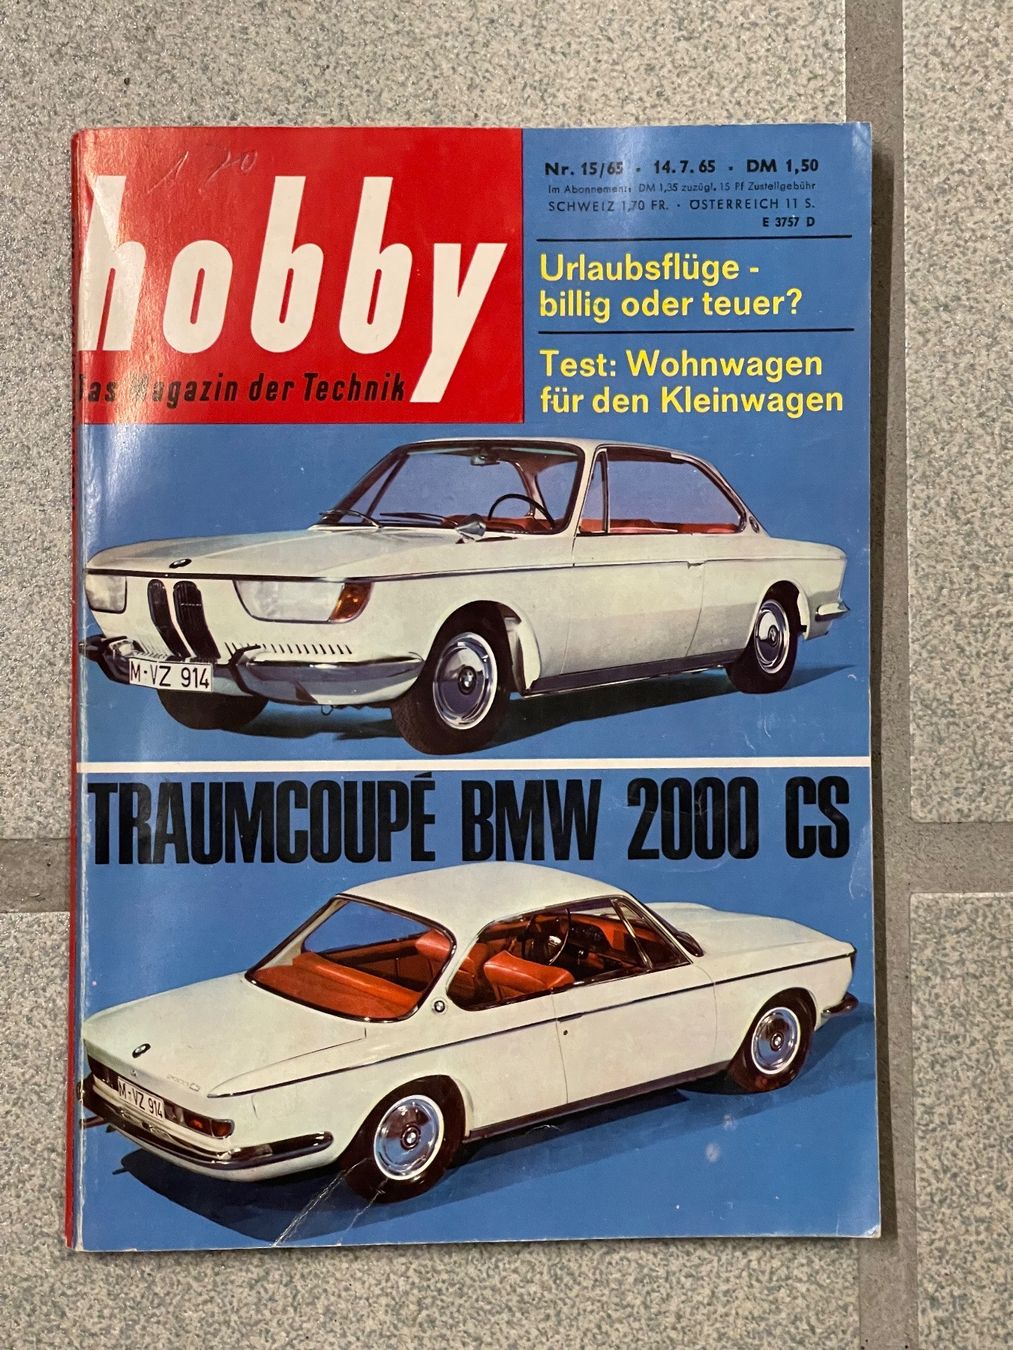 hobby-das-magazin-der-technik-15-1965.jpg